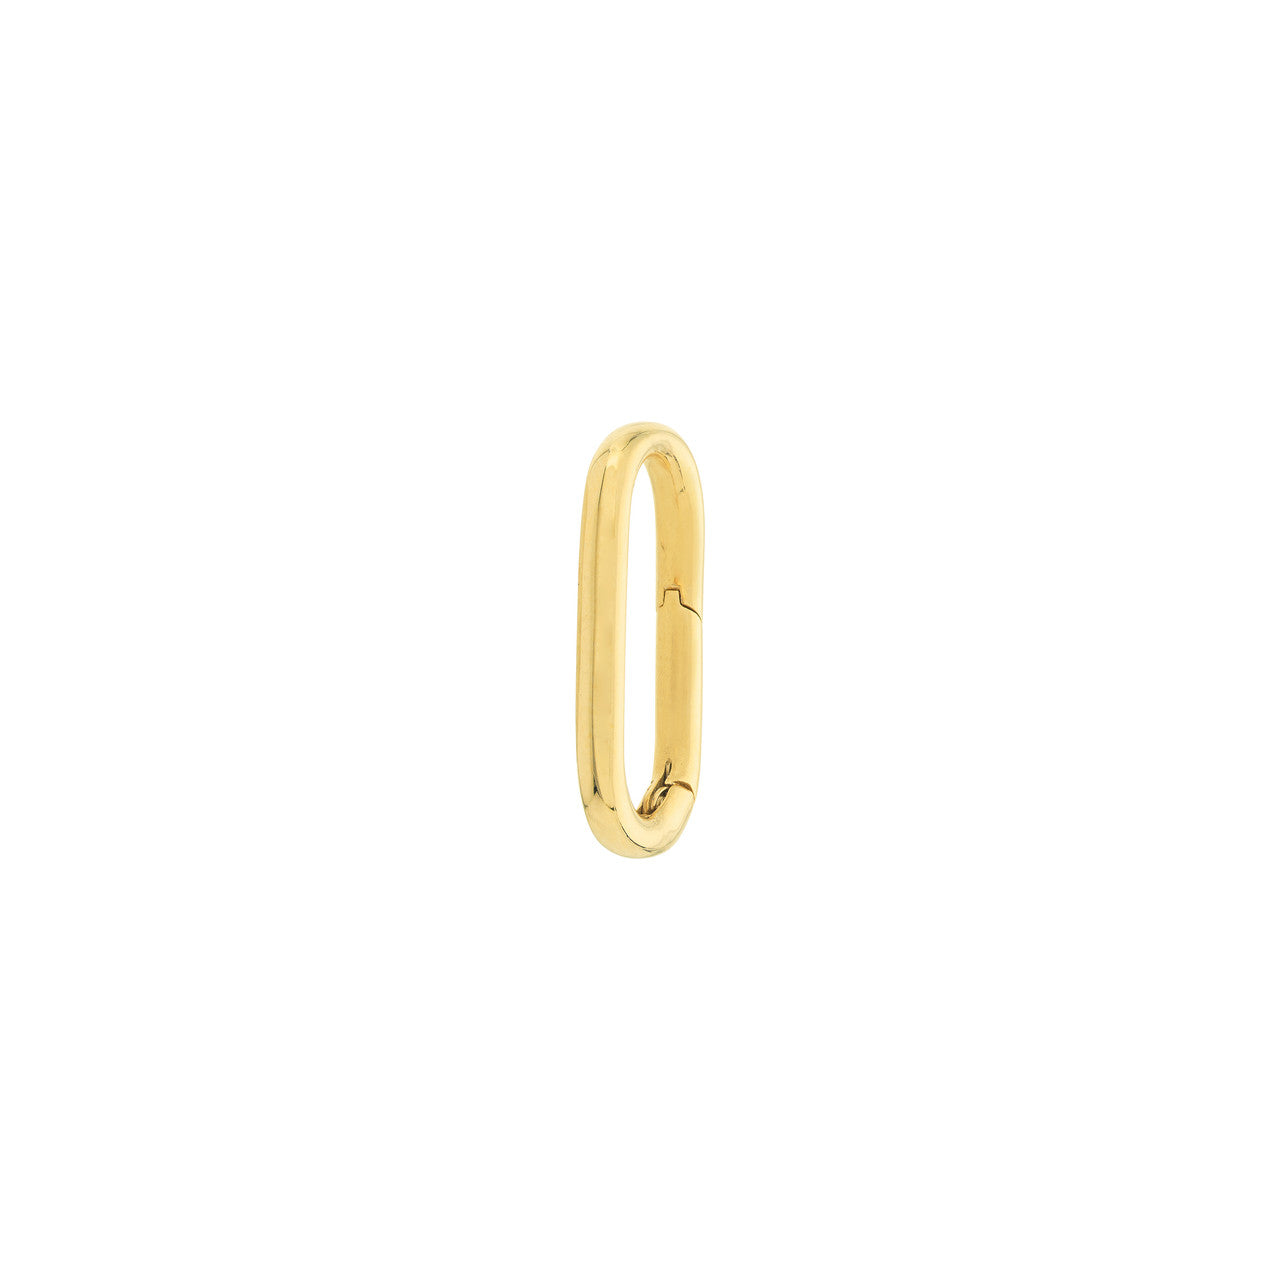 14K Yellow Gold Paper Clip Shaped Push Clasp Lock Connector Enhancer Hanger for Pendants Charms Bracelets Anklets Necklaces Chains